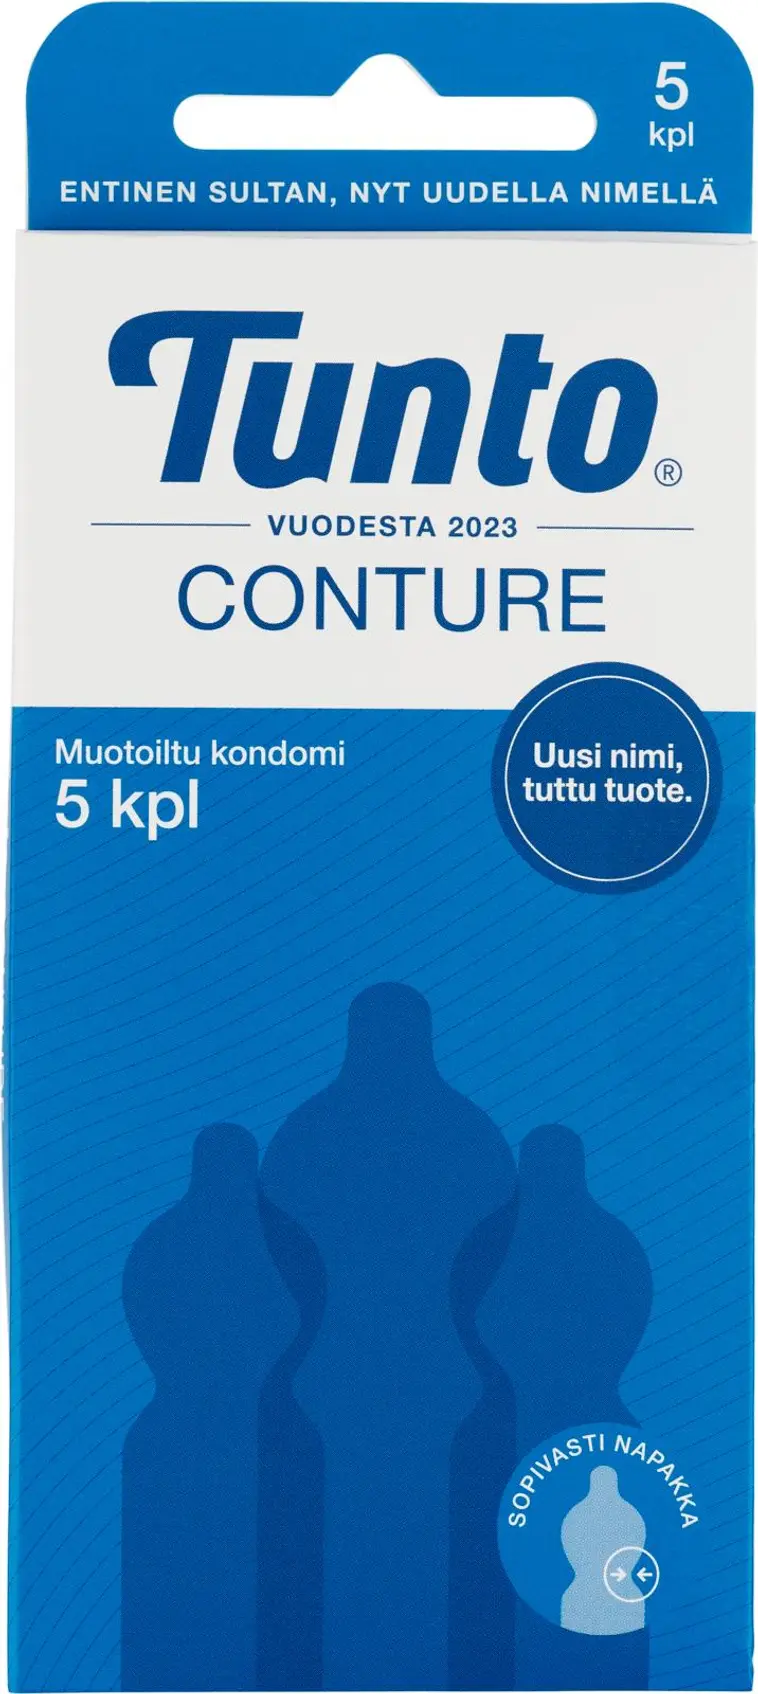 Tunto Conture muotoiltu kondomi 5kpl